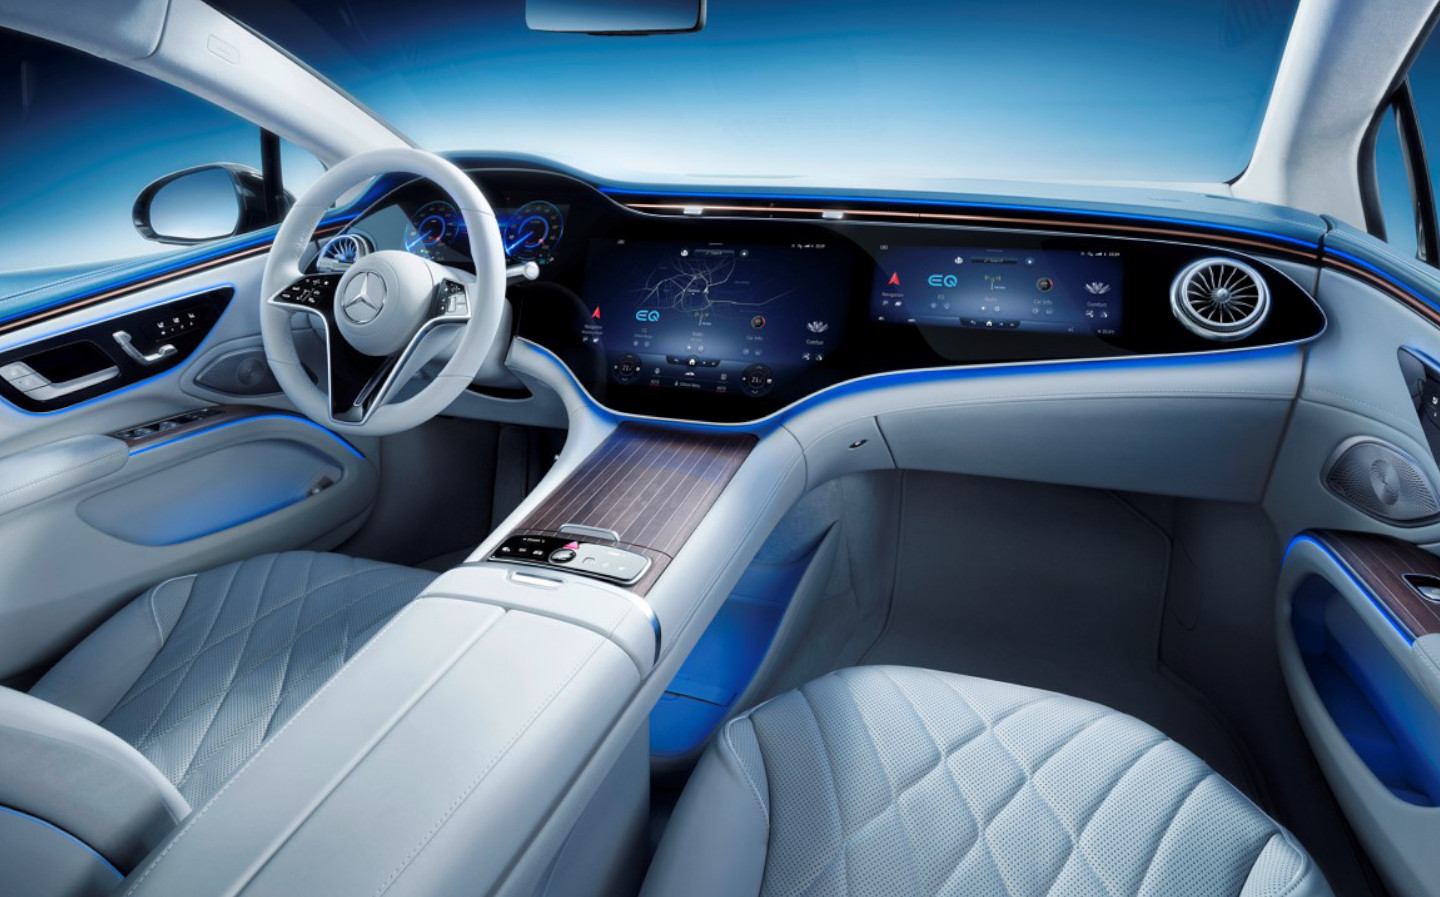 Mercedes' Tesla Model S-rivalling luxury electric car gets triple-screen  digital dashboard